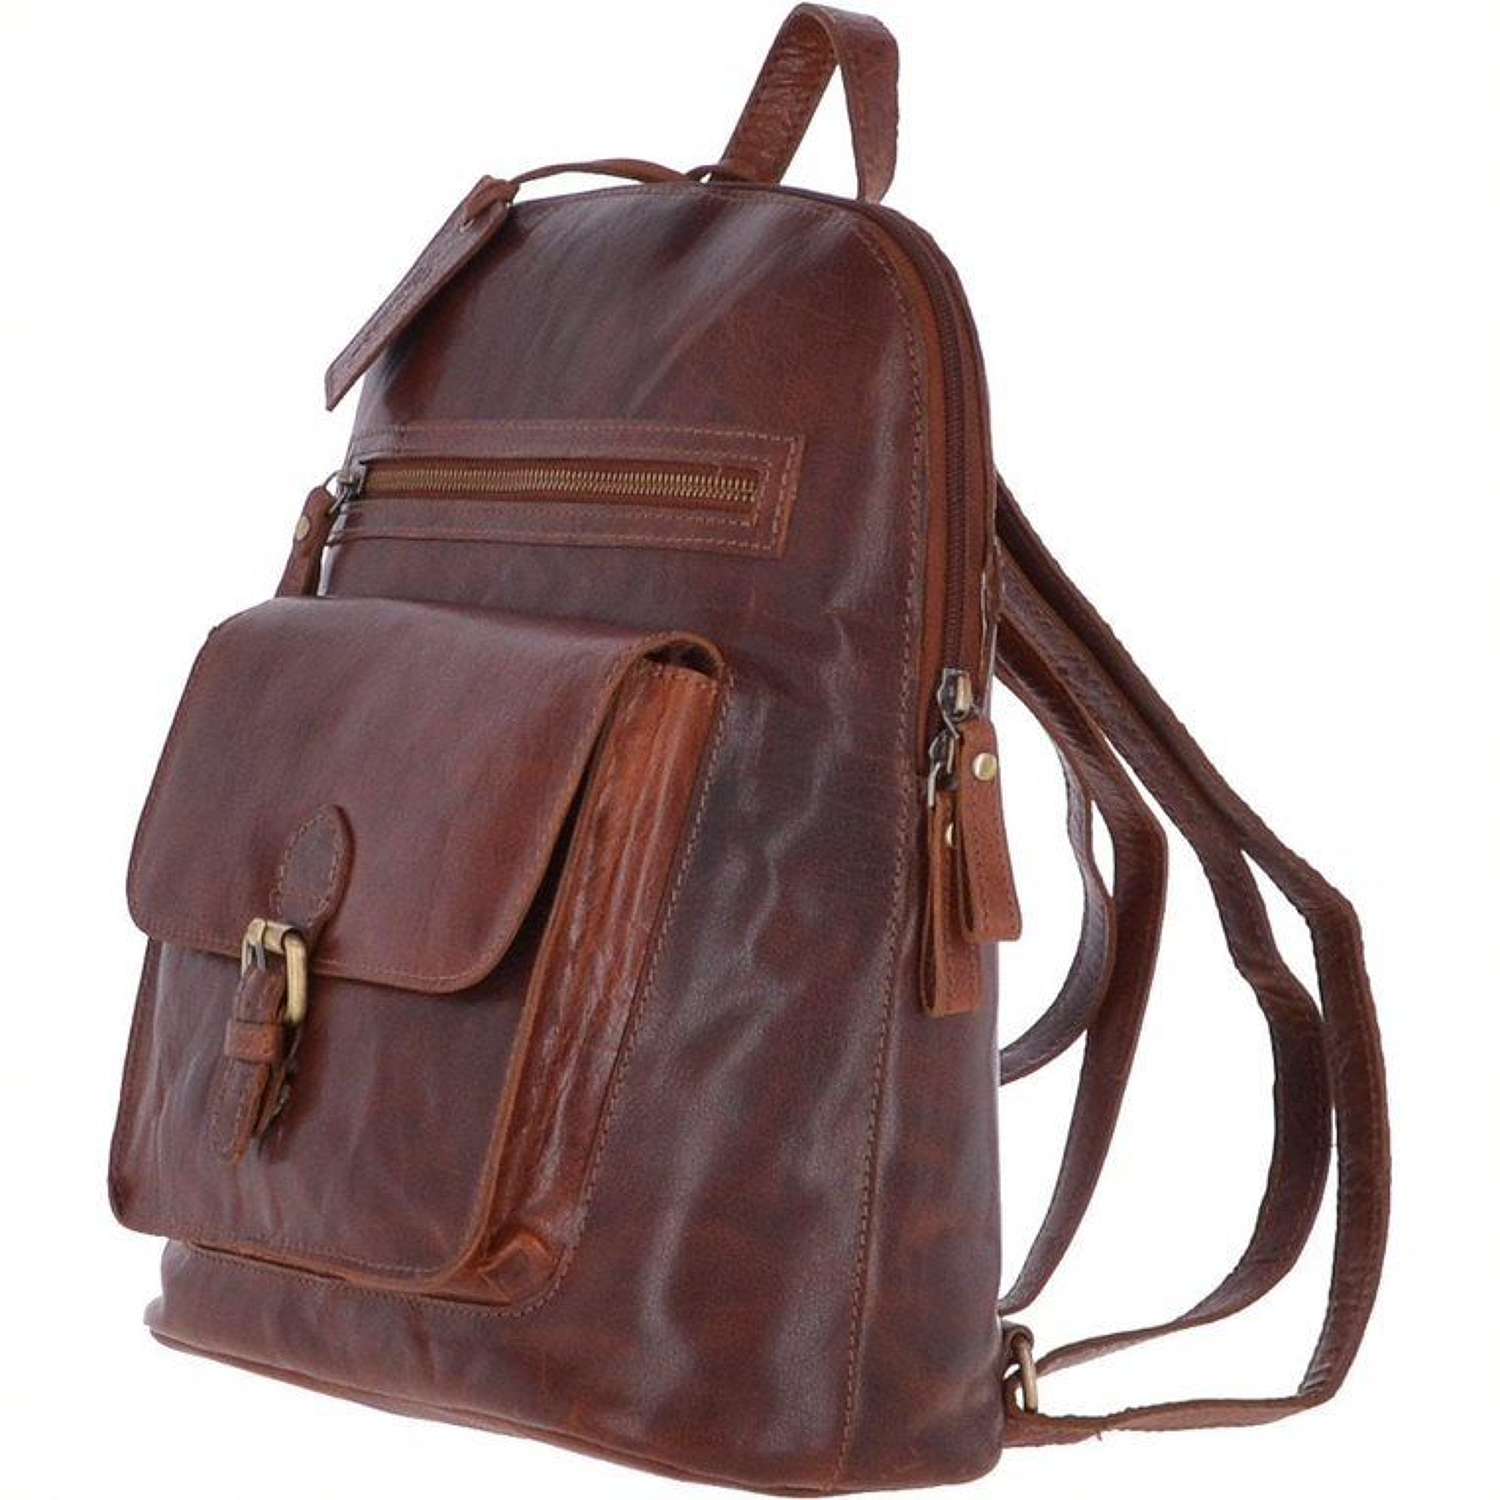 Leather Handbag Honey - G-28